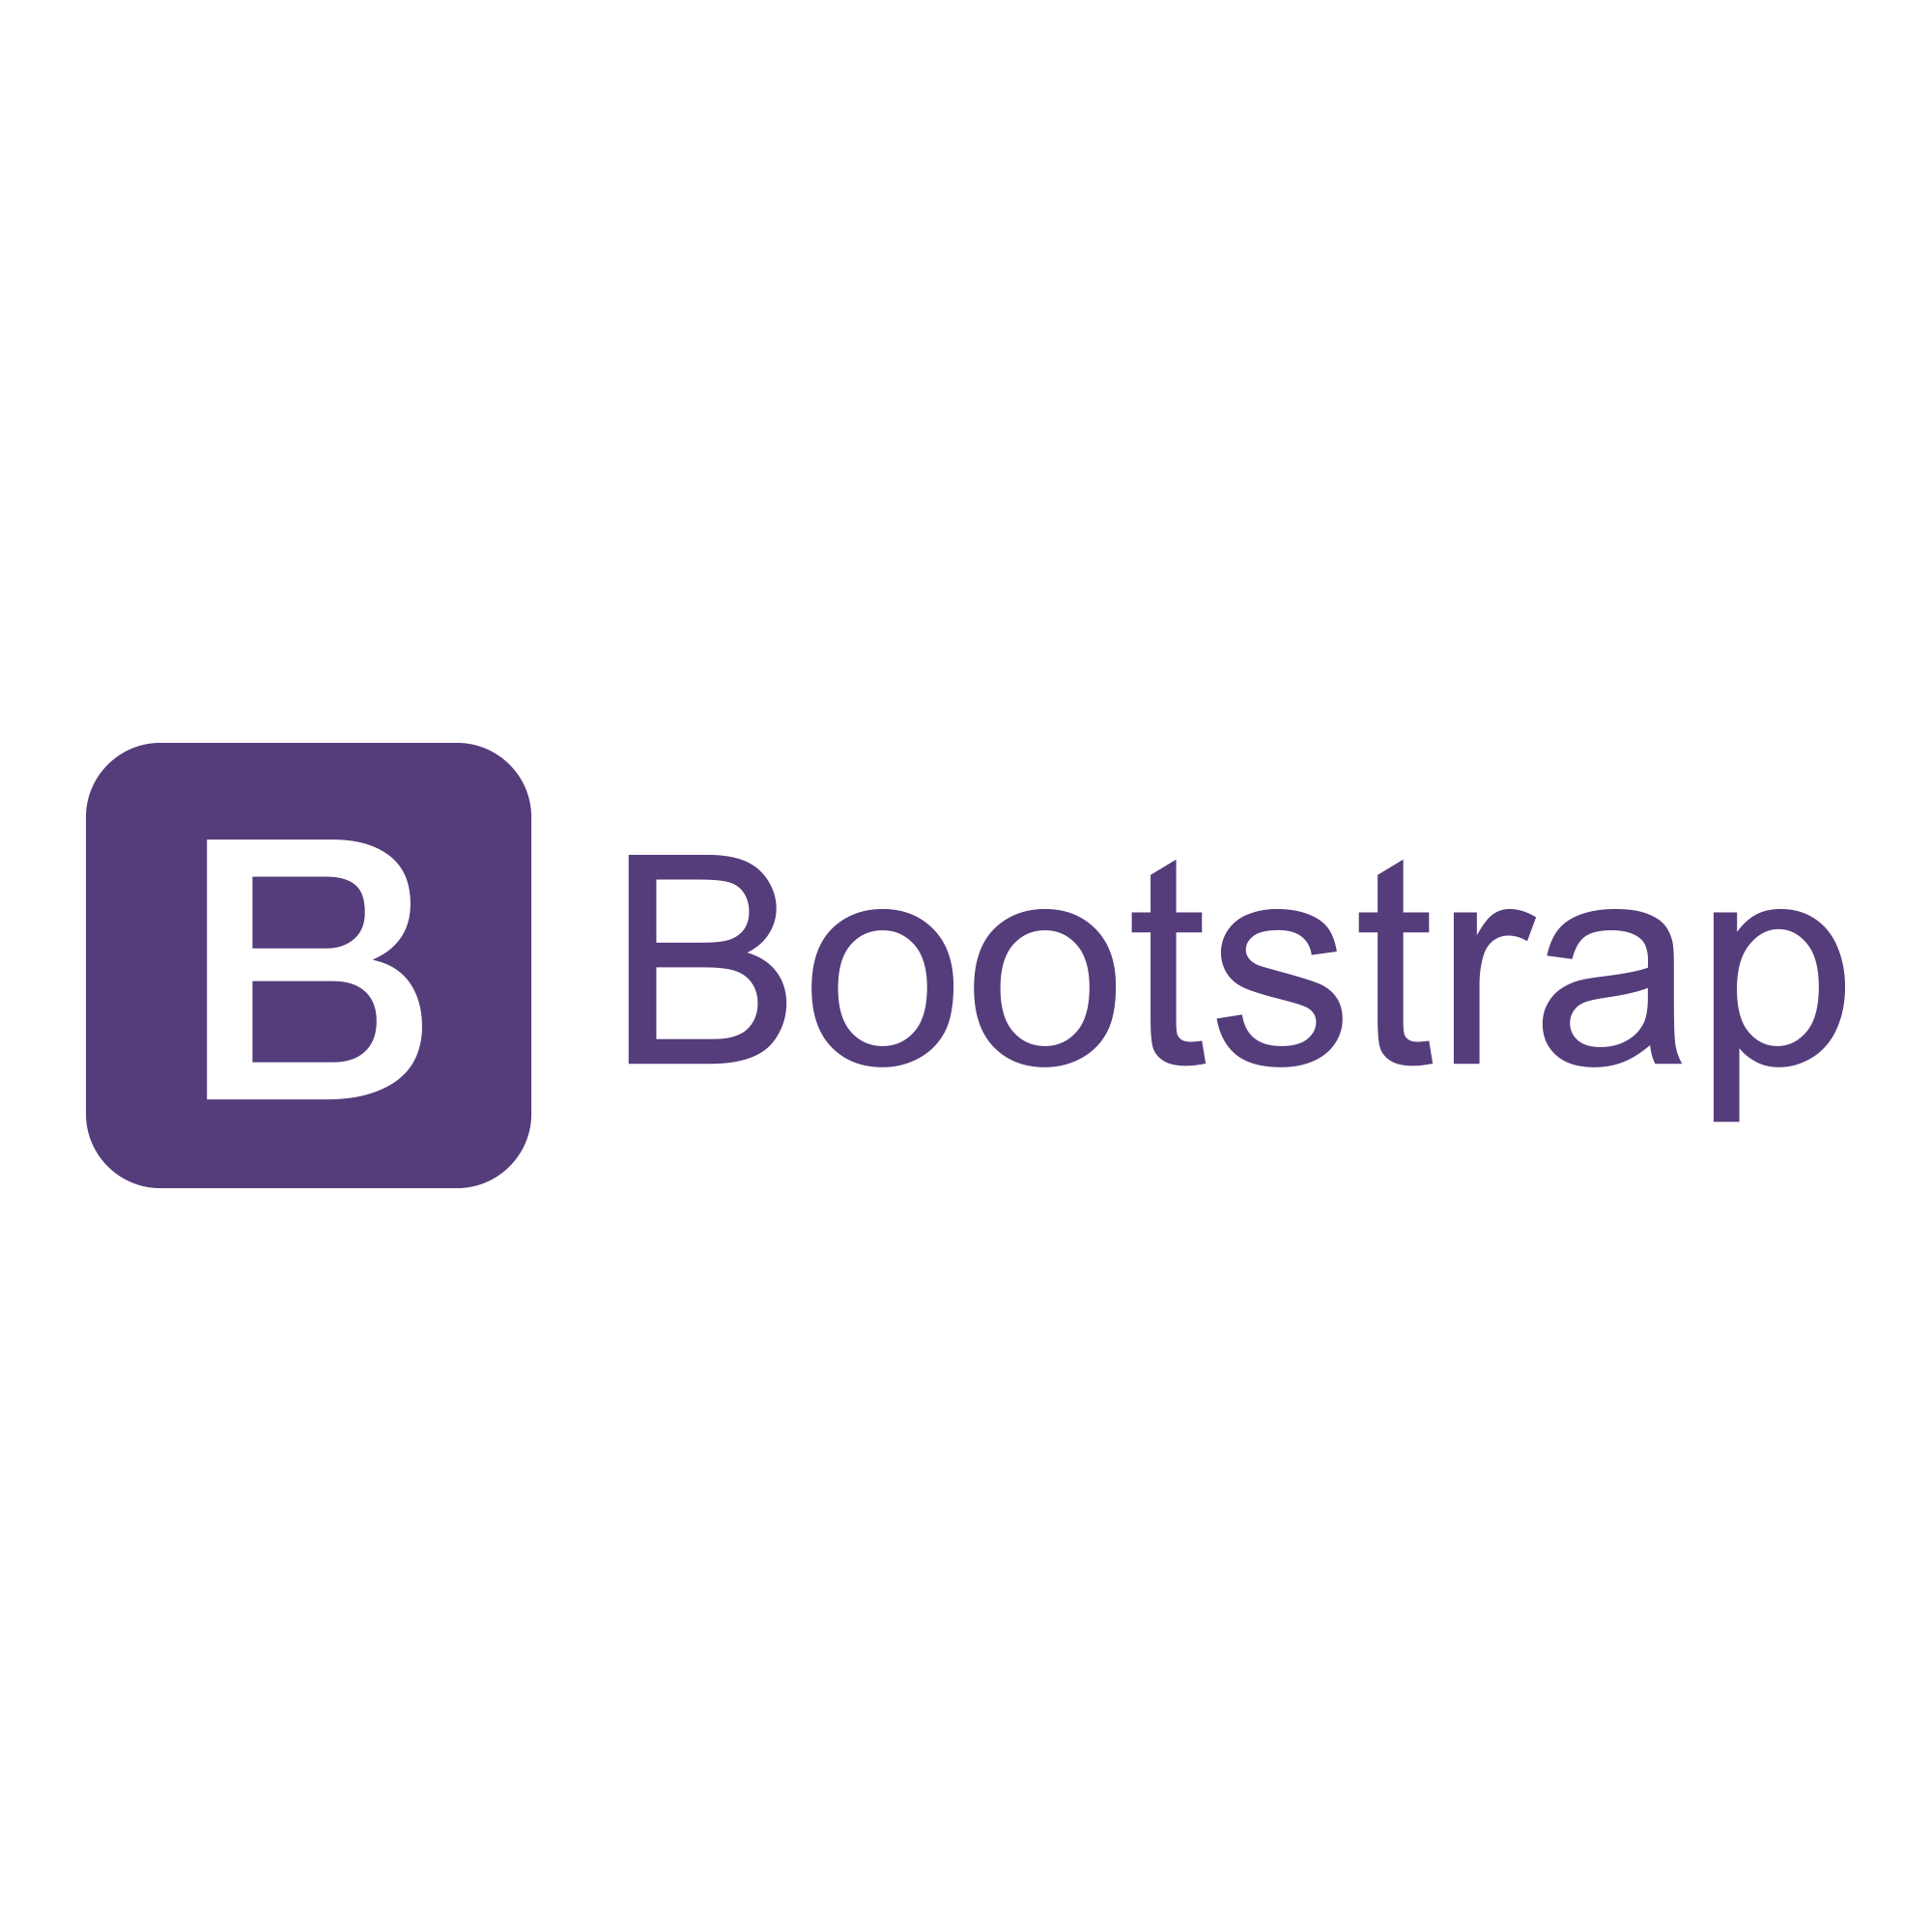 Bootstrap get. Bootstrap. Картинка Bootstrap. Бутстрап логотип. Логотип Bootstrap PNG.